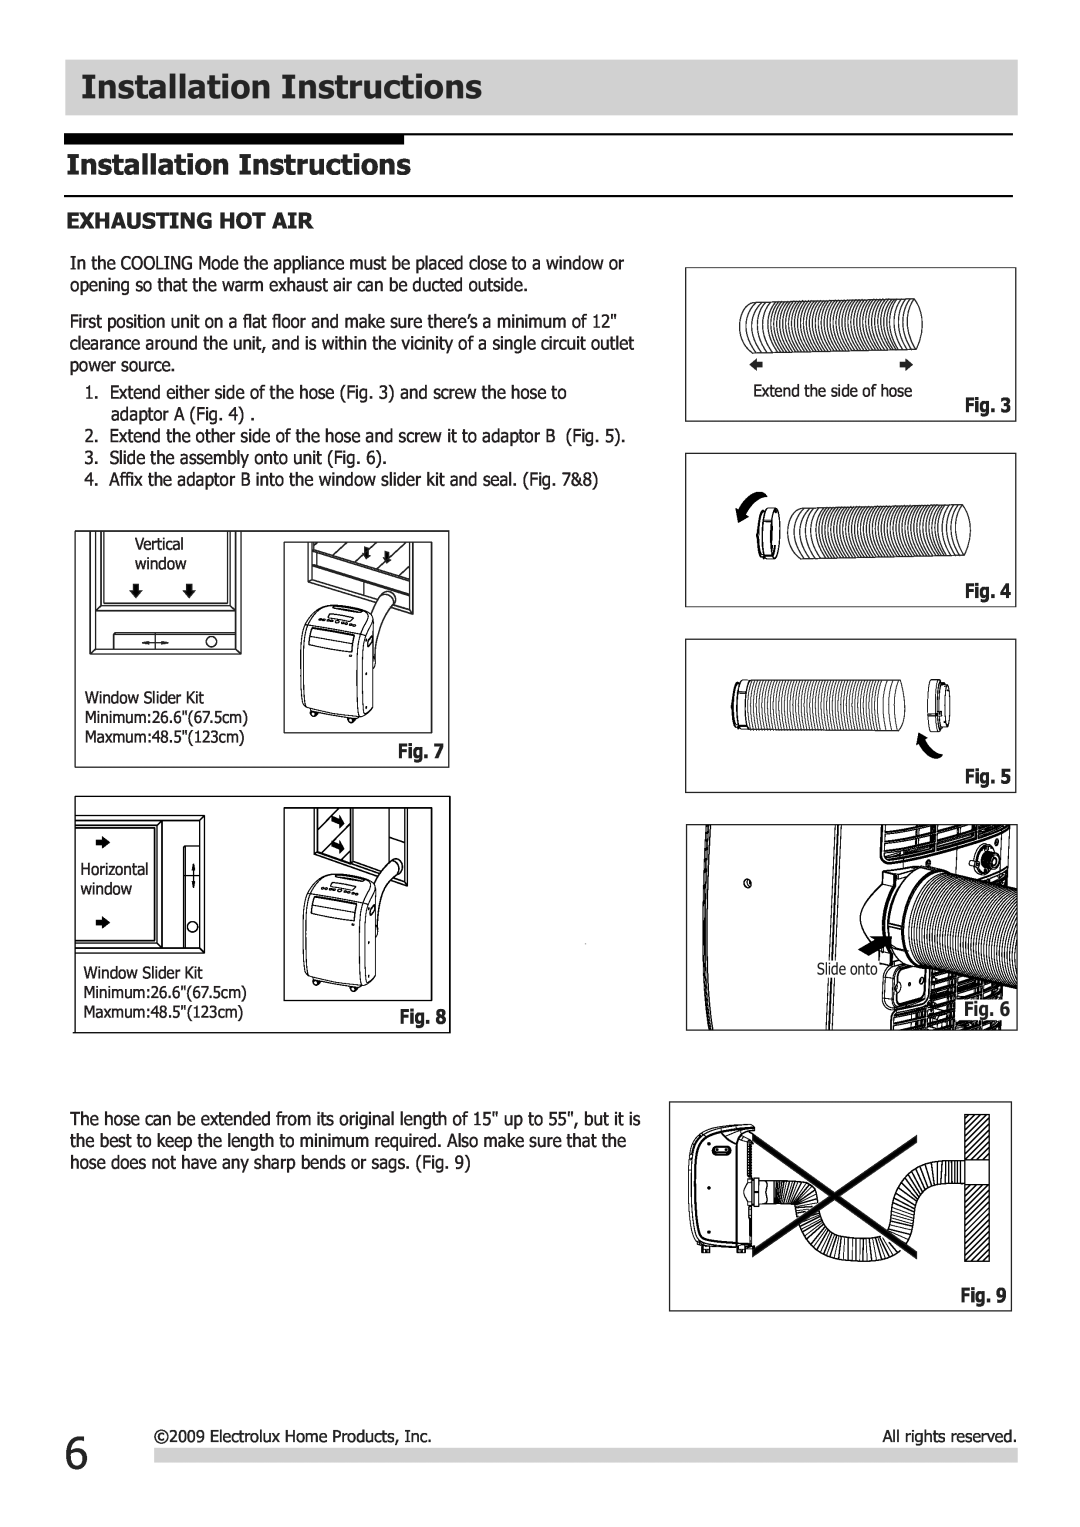 Frigidaire FGHD2472PF installation instructions Installation Instructions, Exhausting Hot Air 